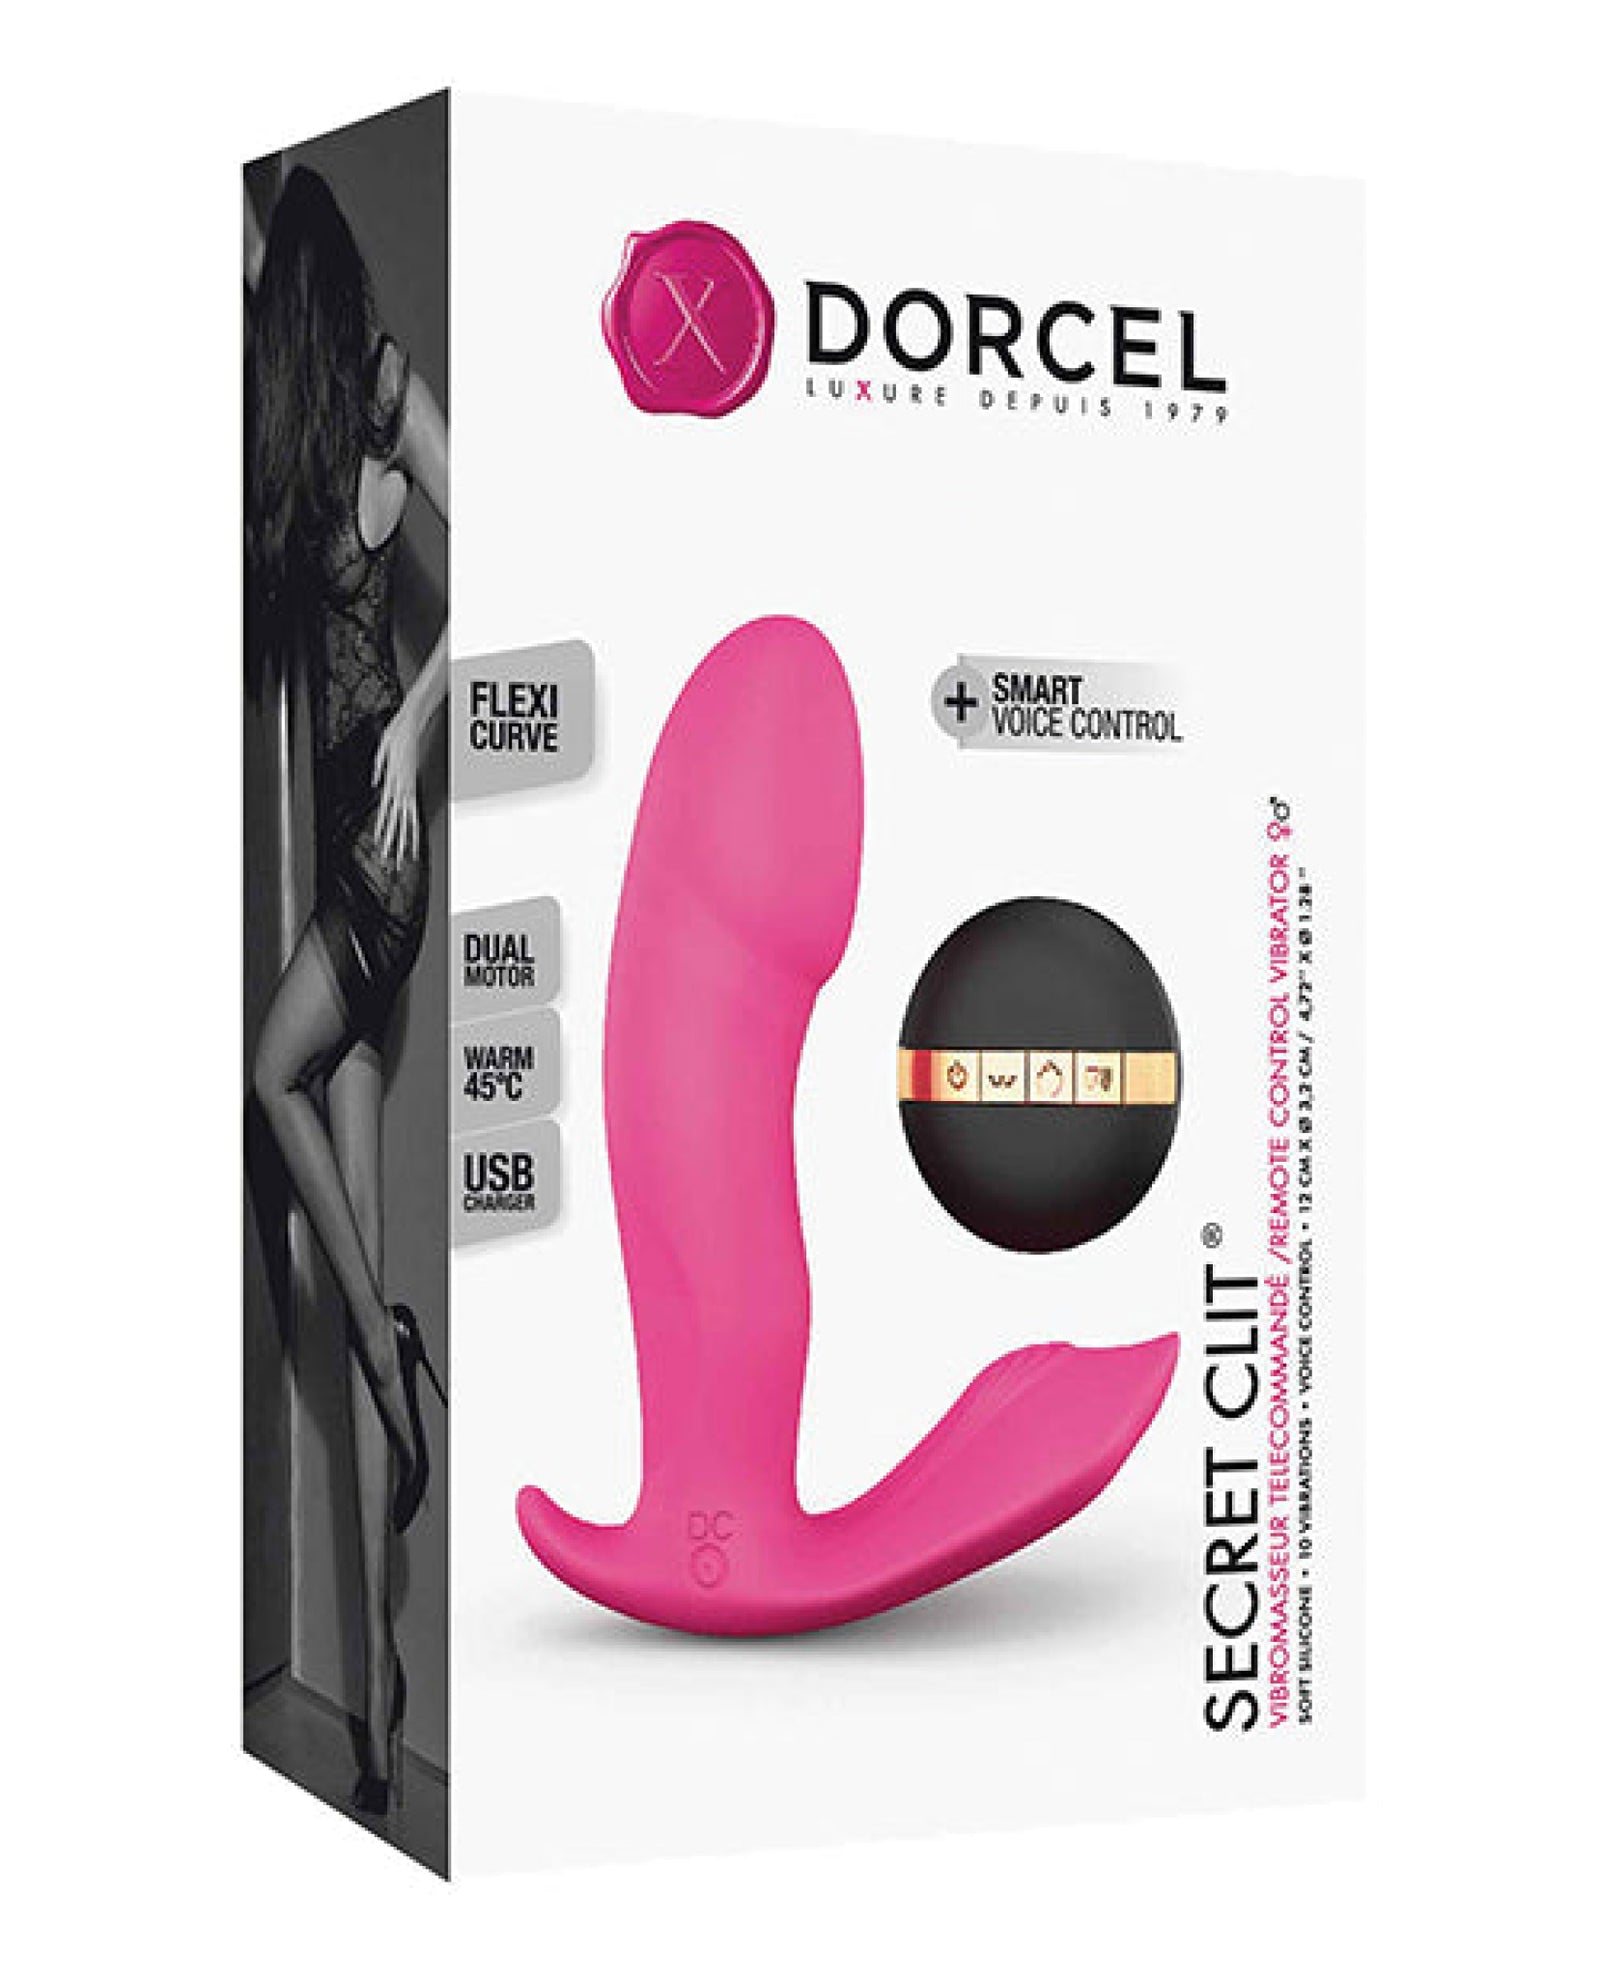 Dorcel Secret Clit Dual Stim Heating And Voice Control - Pink Dorcel